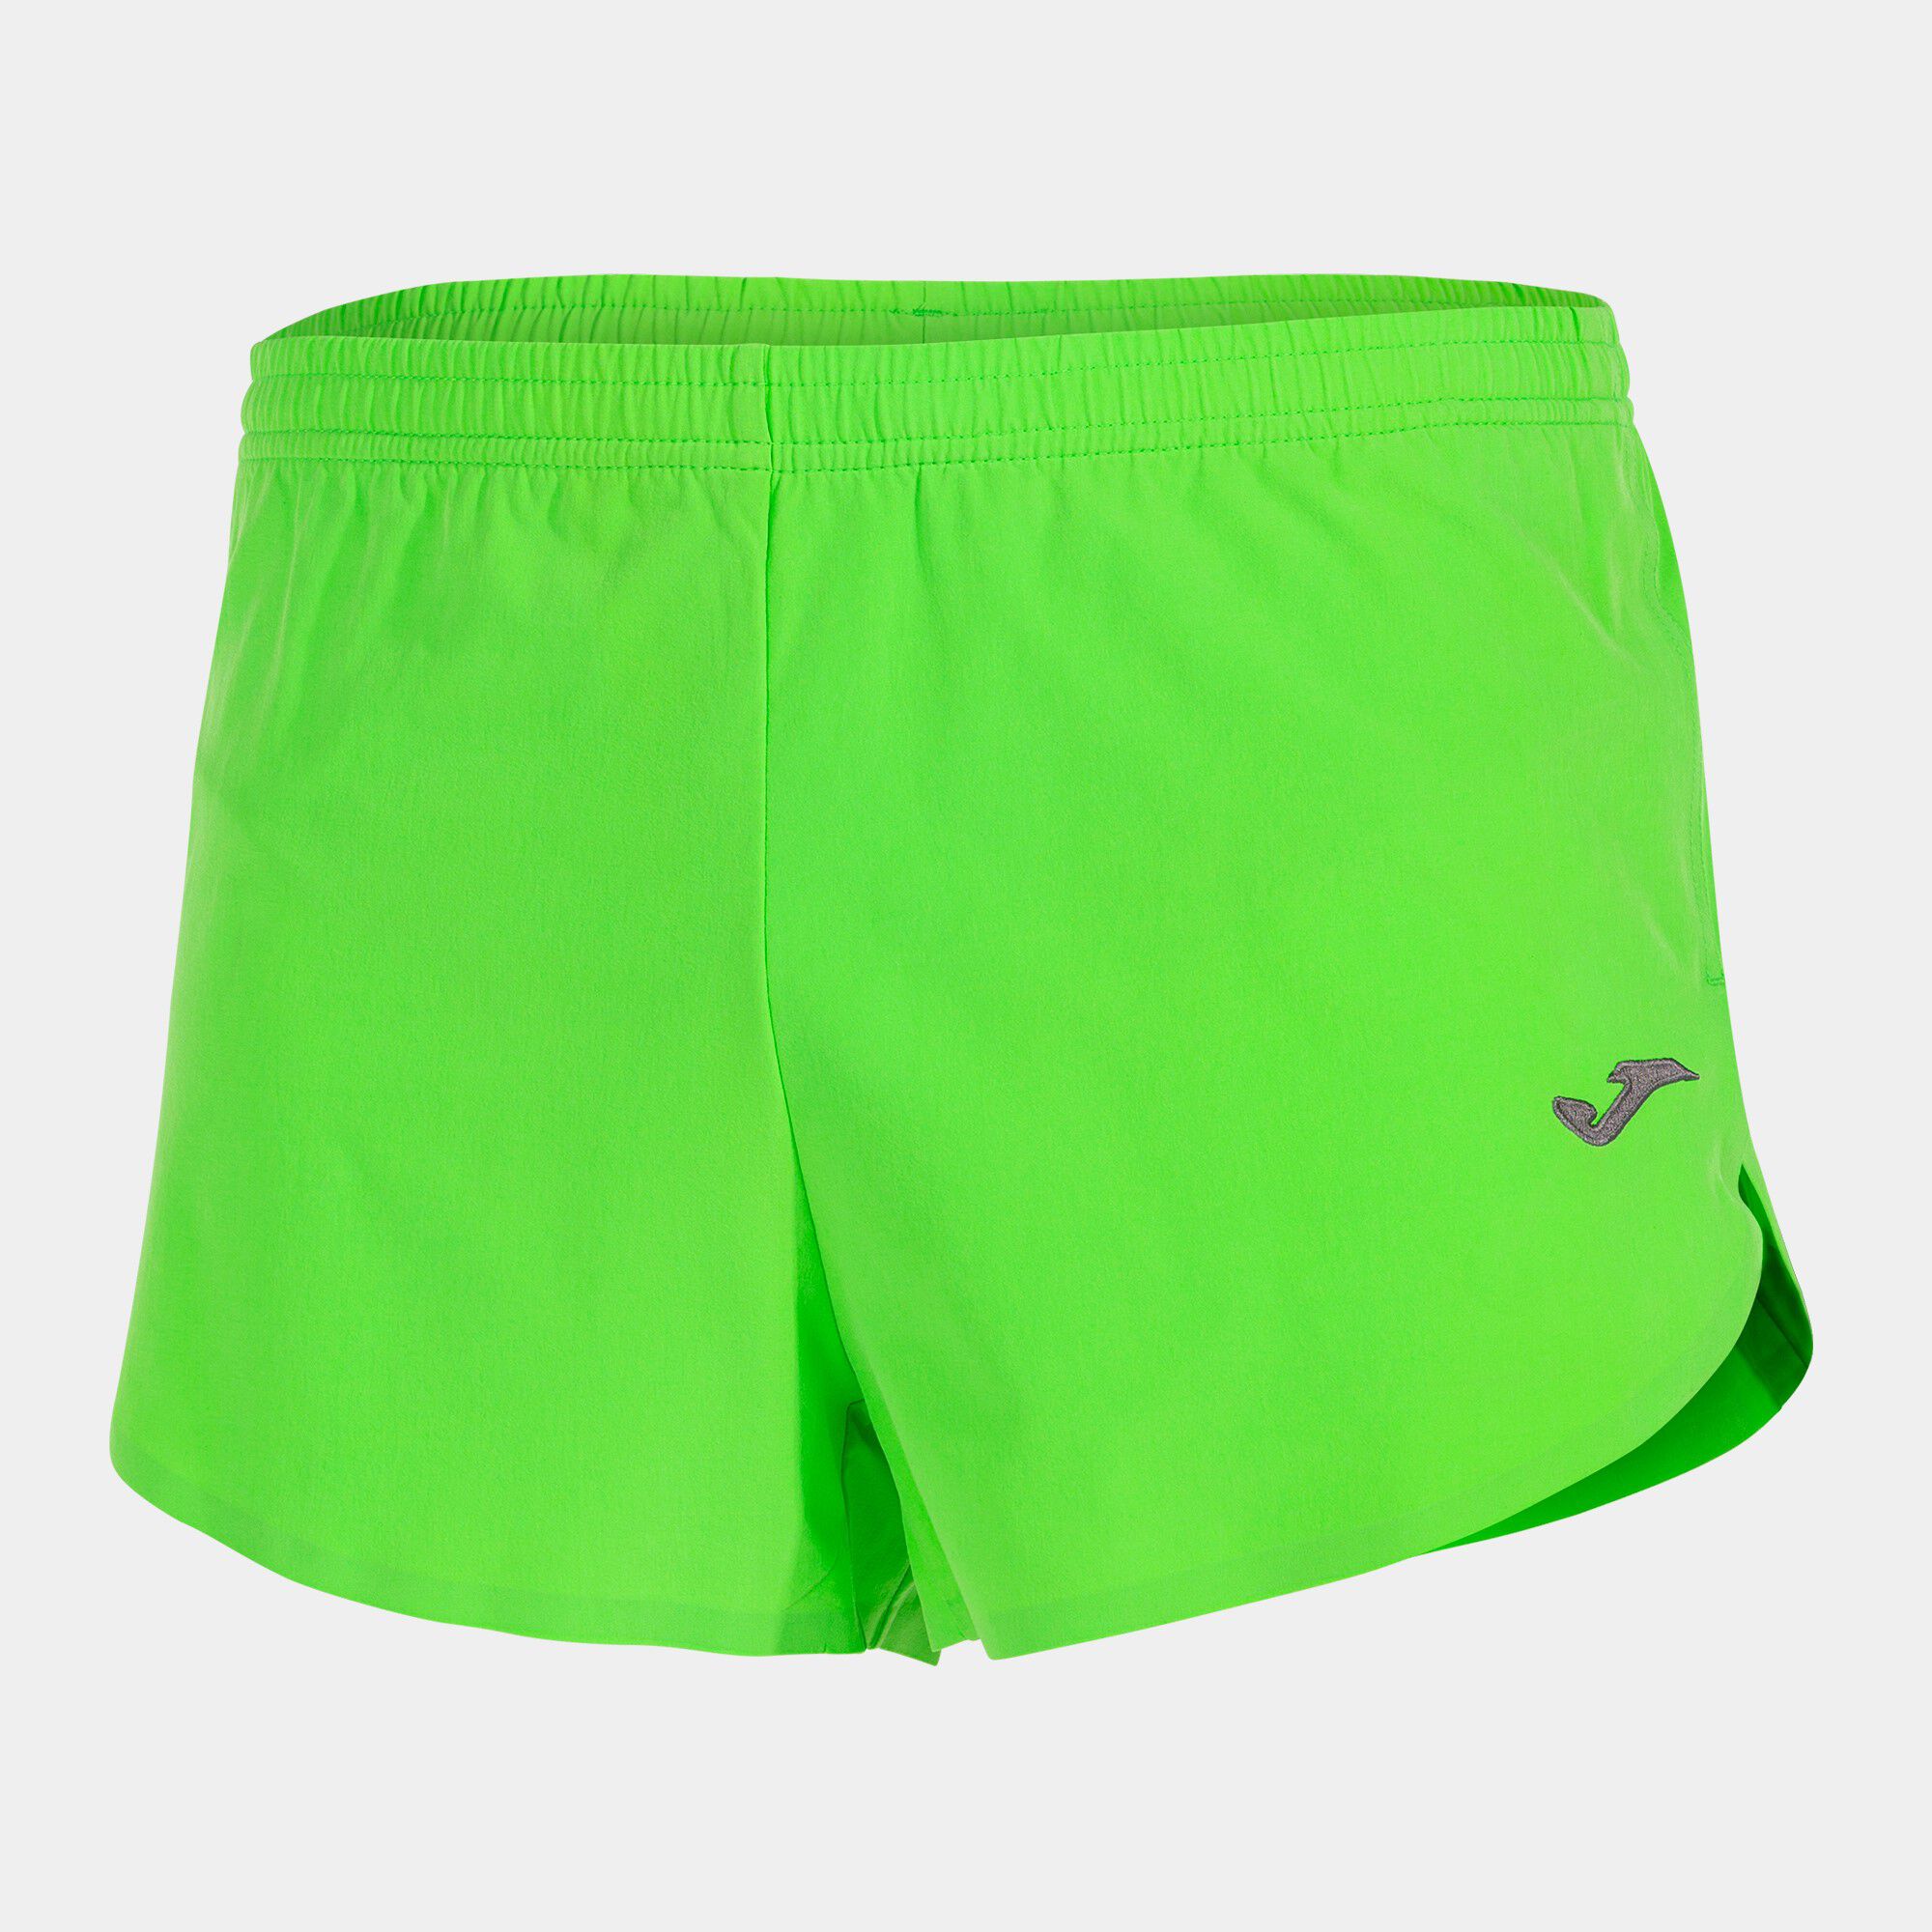 Pantaloncini uomo Olimpia verde fluorescente